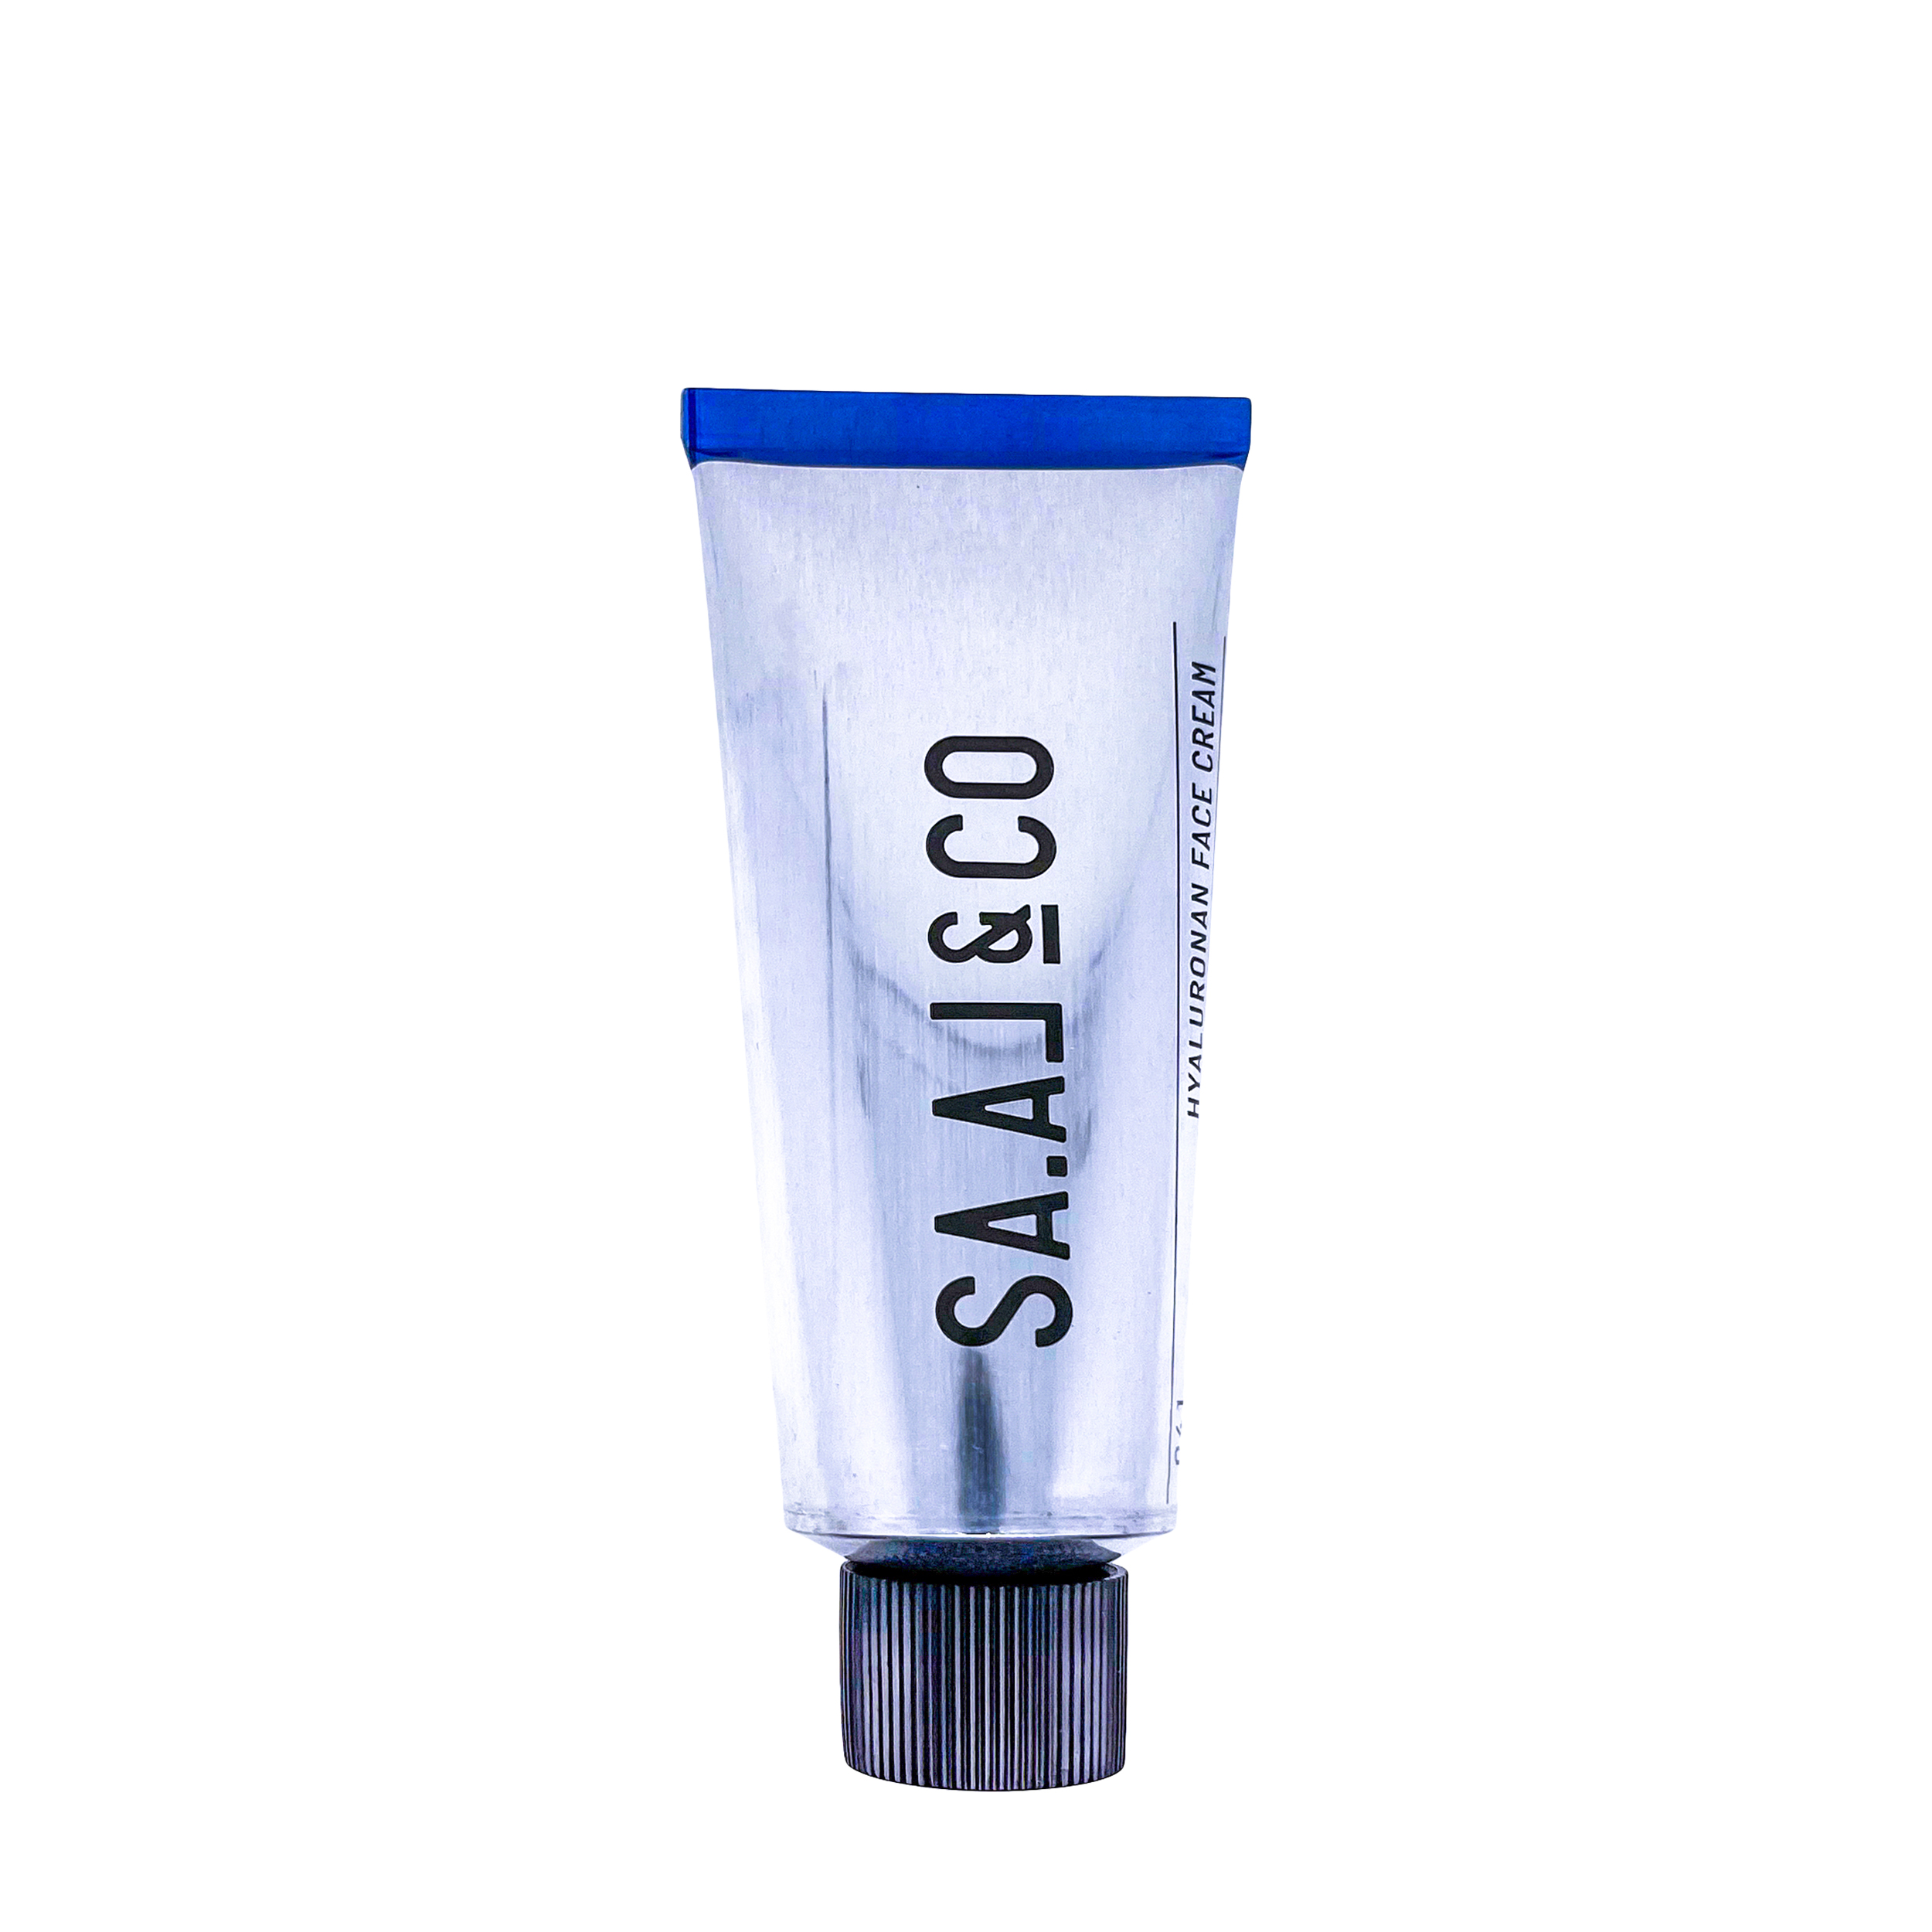 SA.AL&CO SA.AL&CO 041 Hyaluronan Face Cream 100 ml - увлажняющий крем для лица с гиалуроновой кислотой 100 мл SAAL041new - фото 1